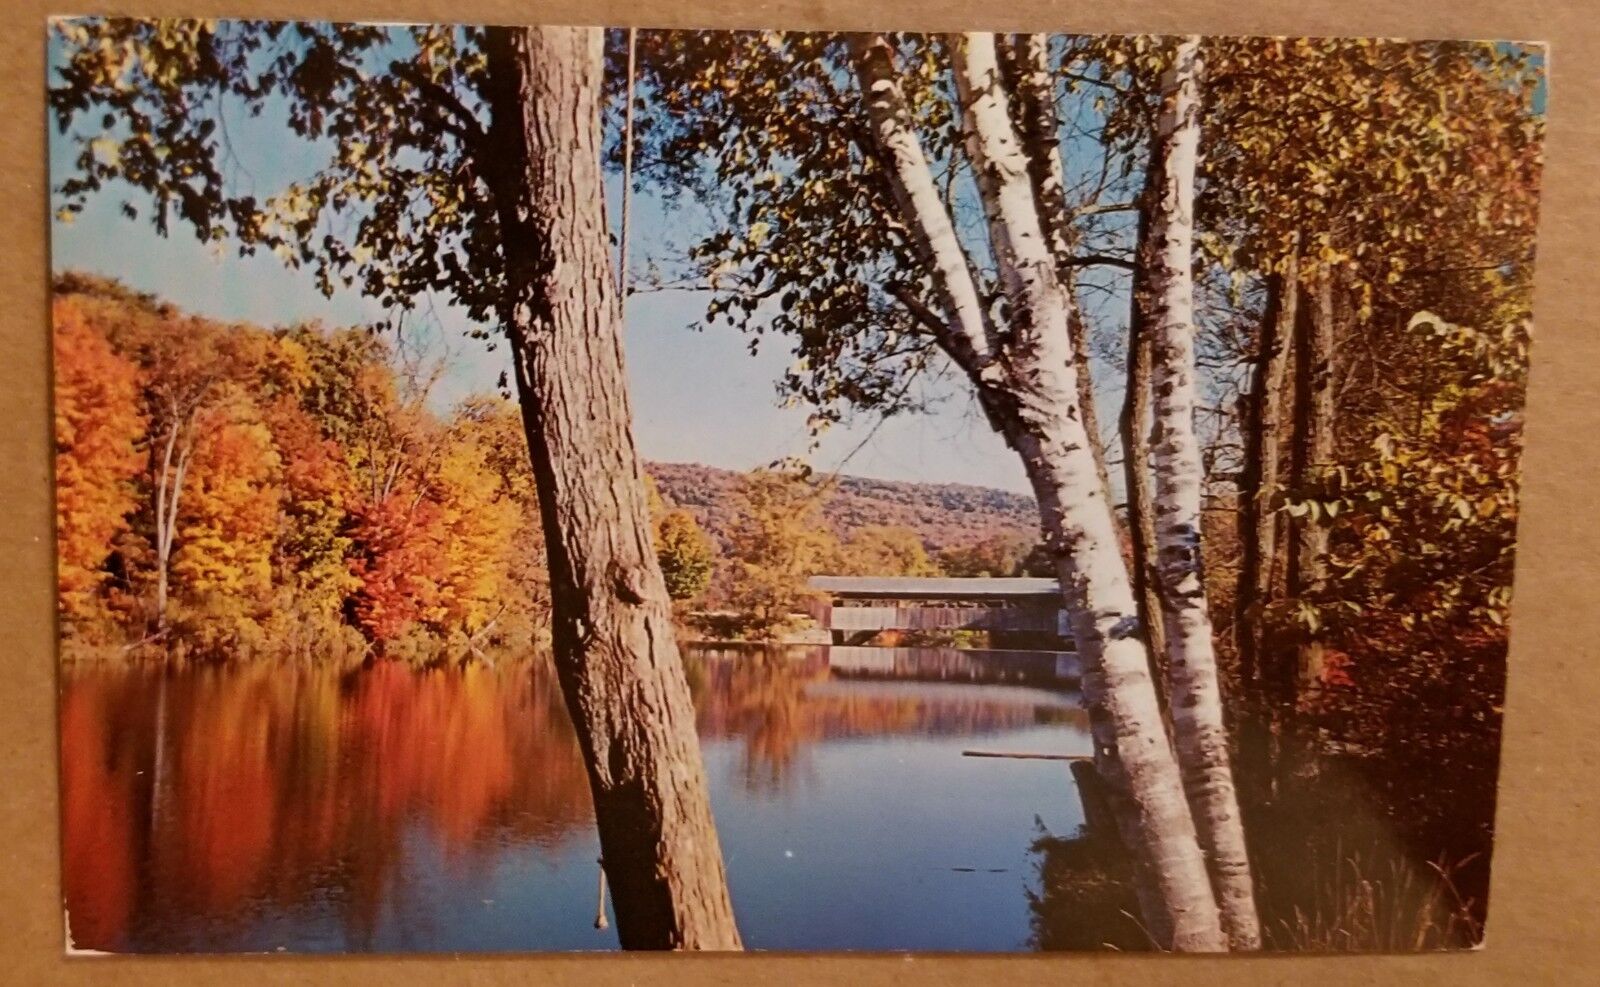 Postcard: Covered Bridge over the Ottauquechee River, Taftsville, VT (Photo Era)